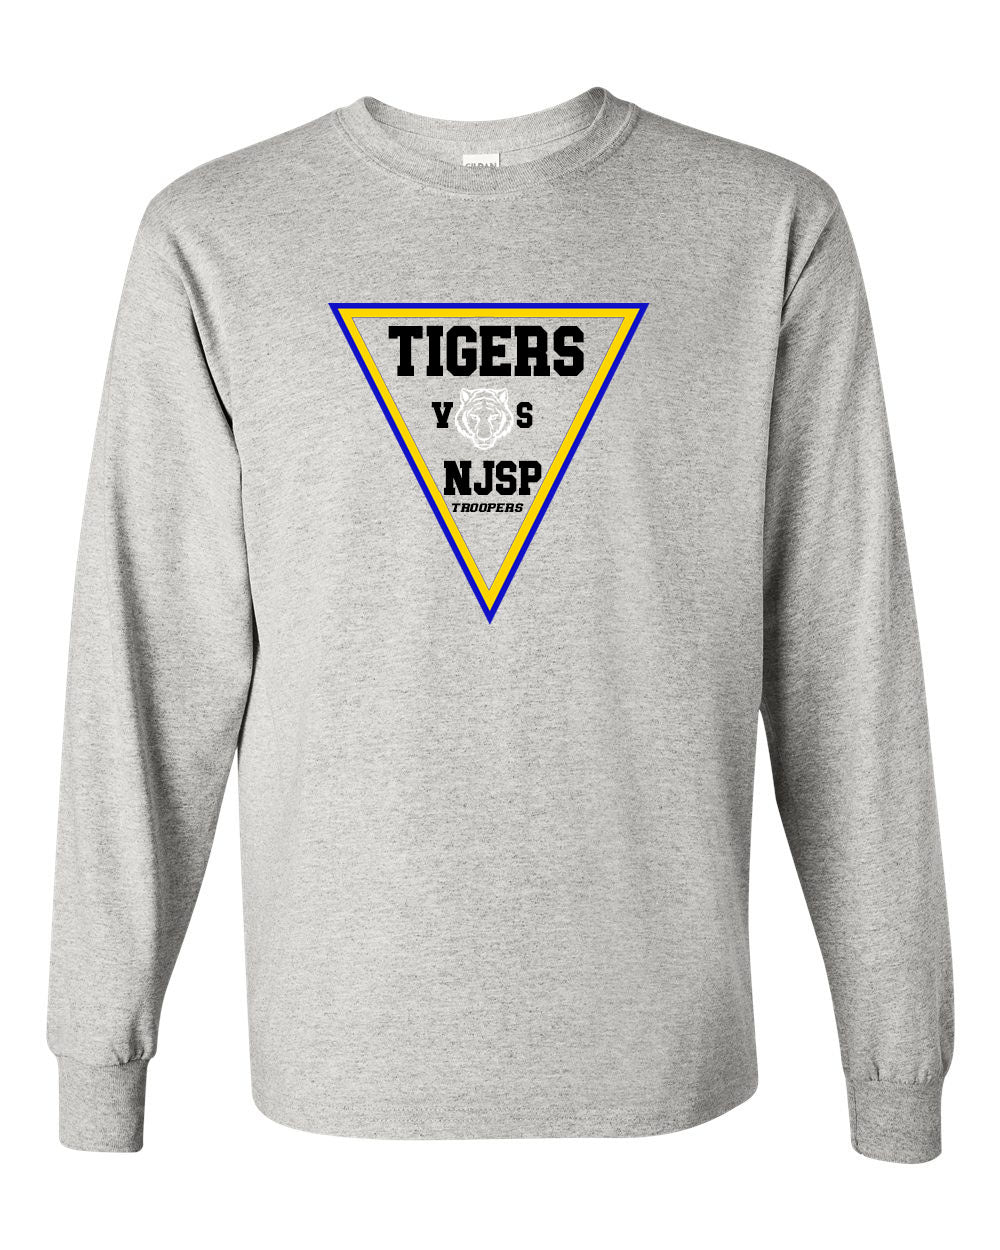 Lafayette Tigers VS Troopers Long Sleeve Shirt